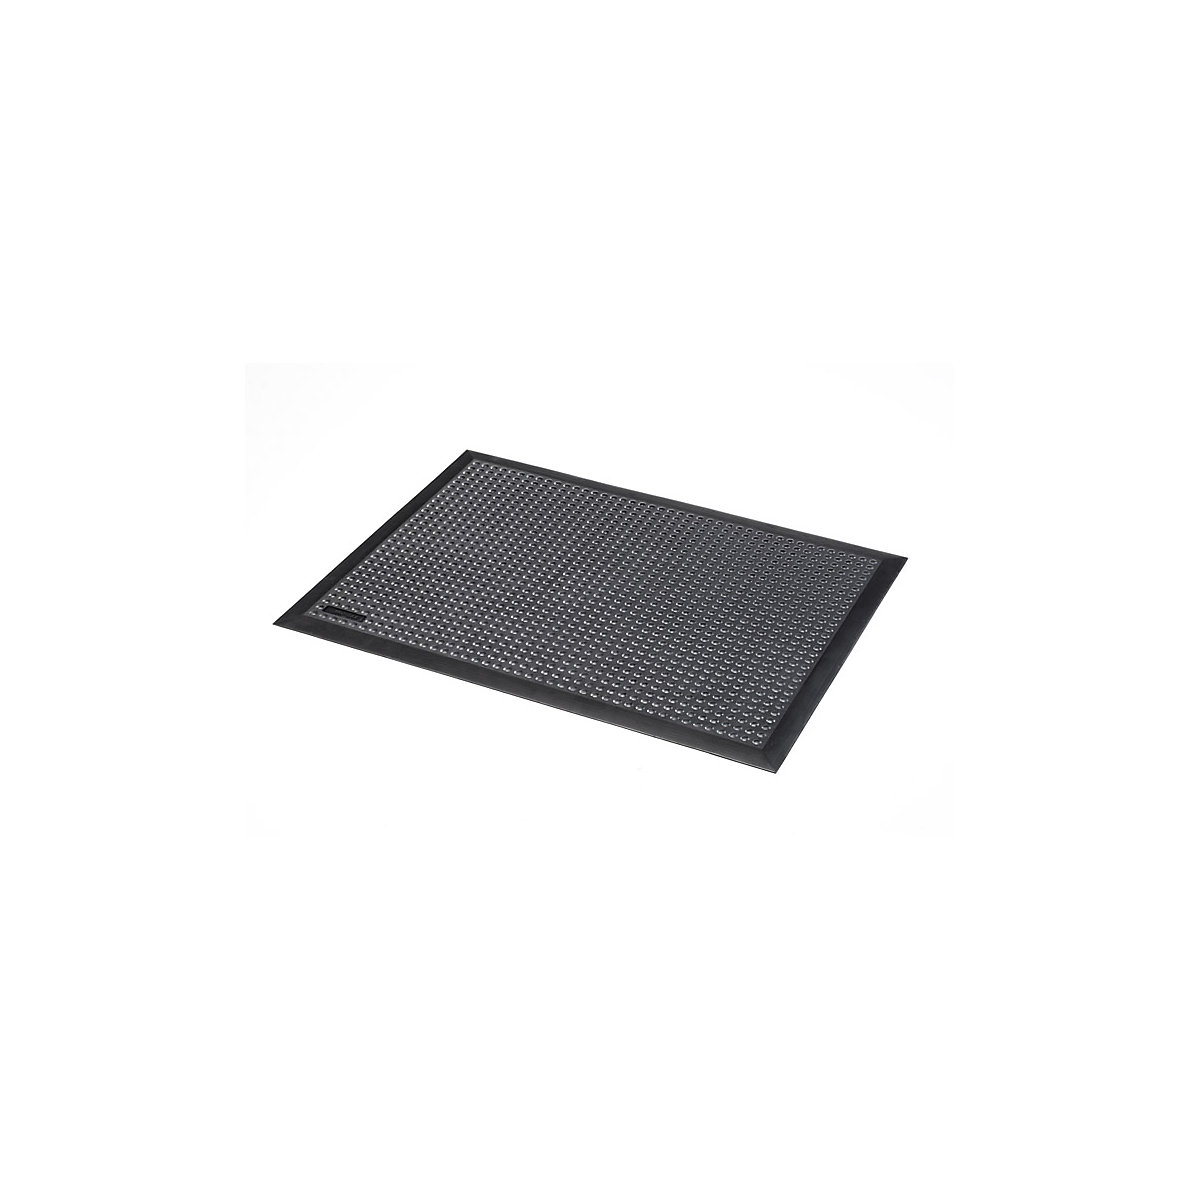 Skystep nitrile rubber workstation matting – NOTRAX